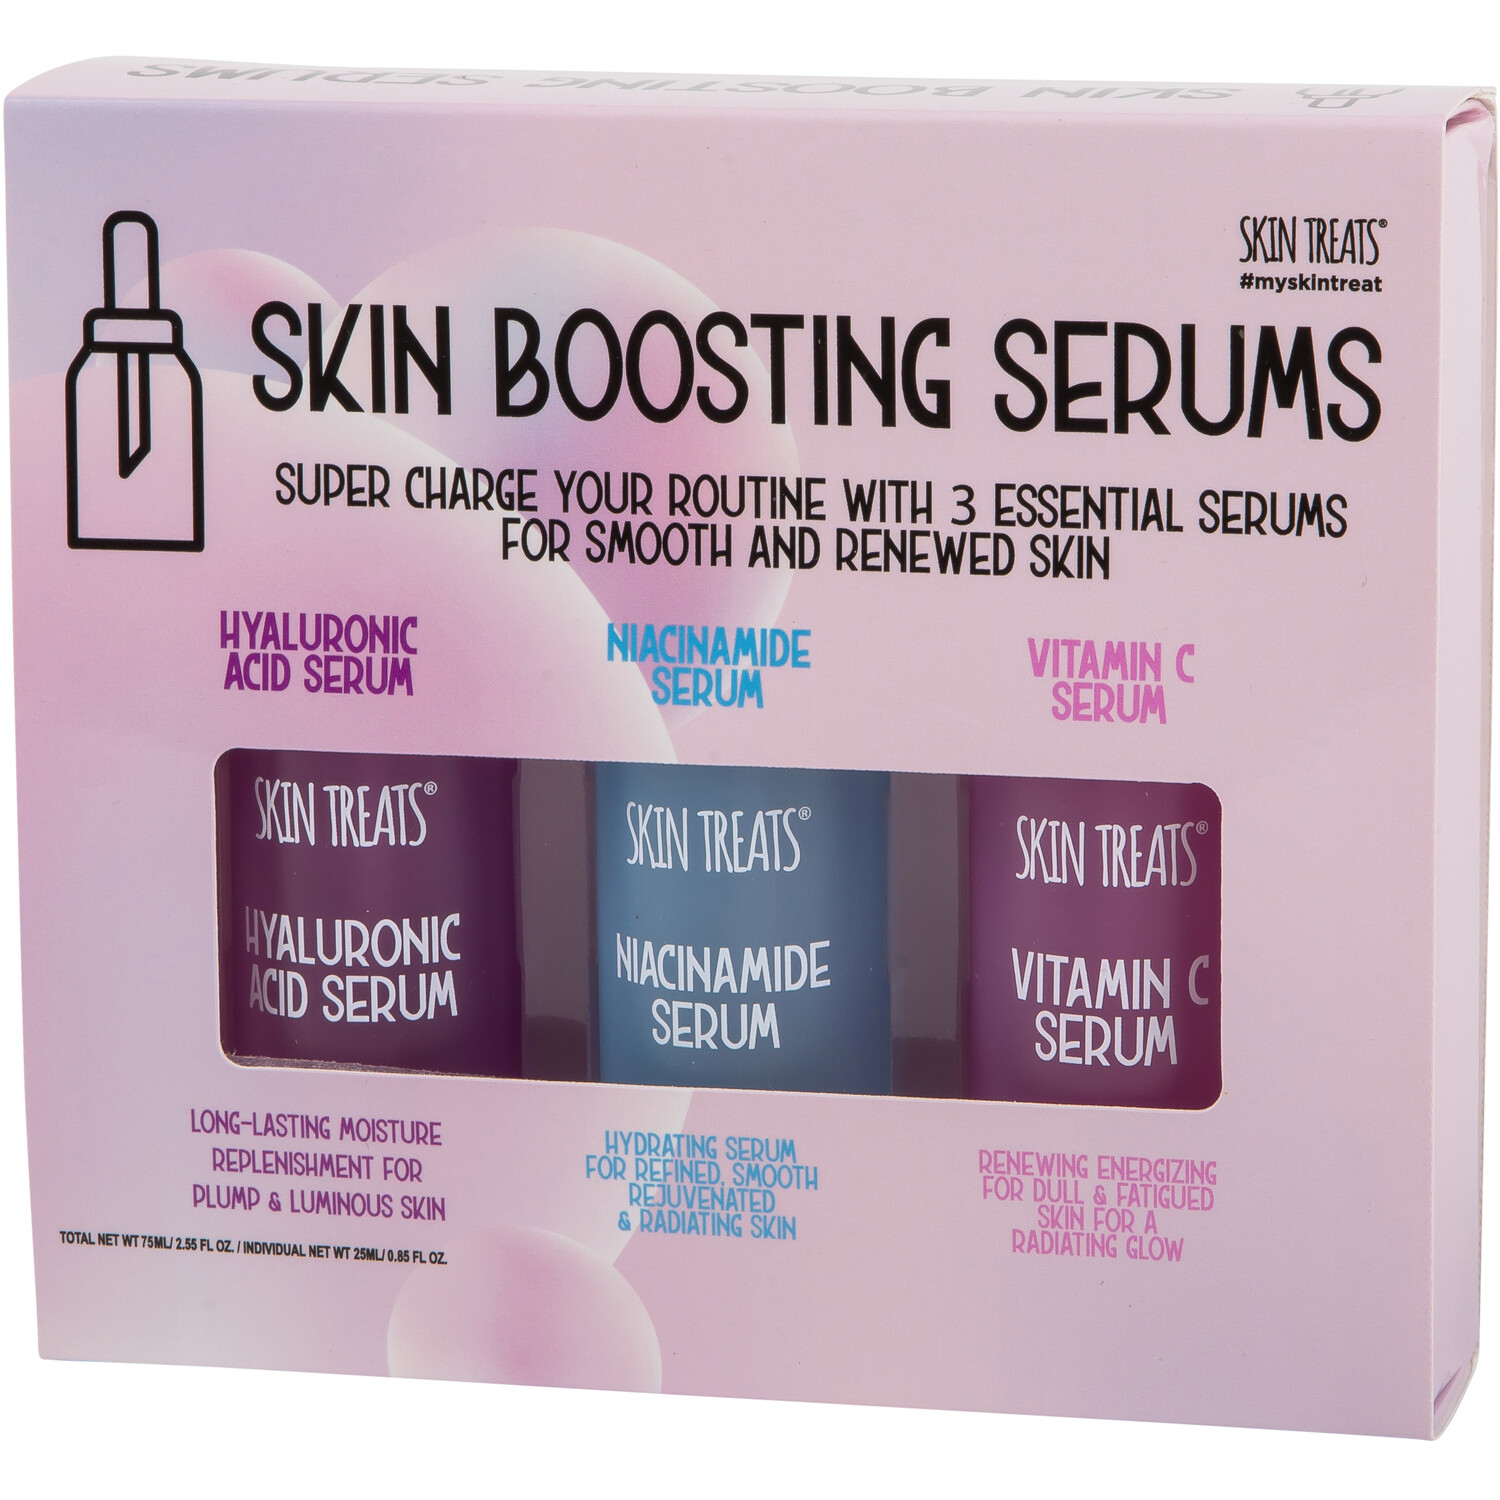 Skin Treats Pink Skin Boosting Serums 3 Pack Image 1